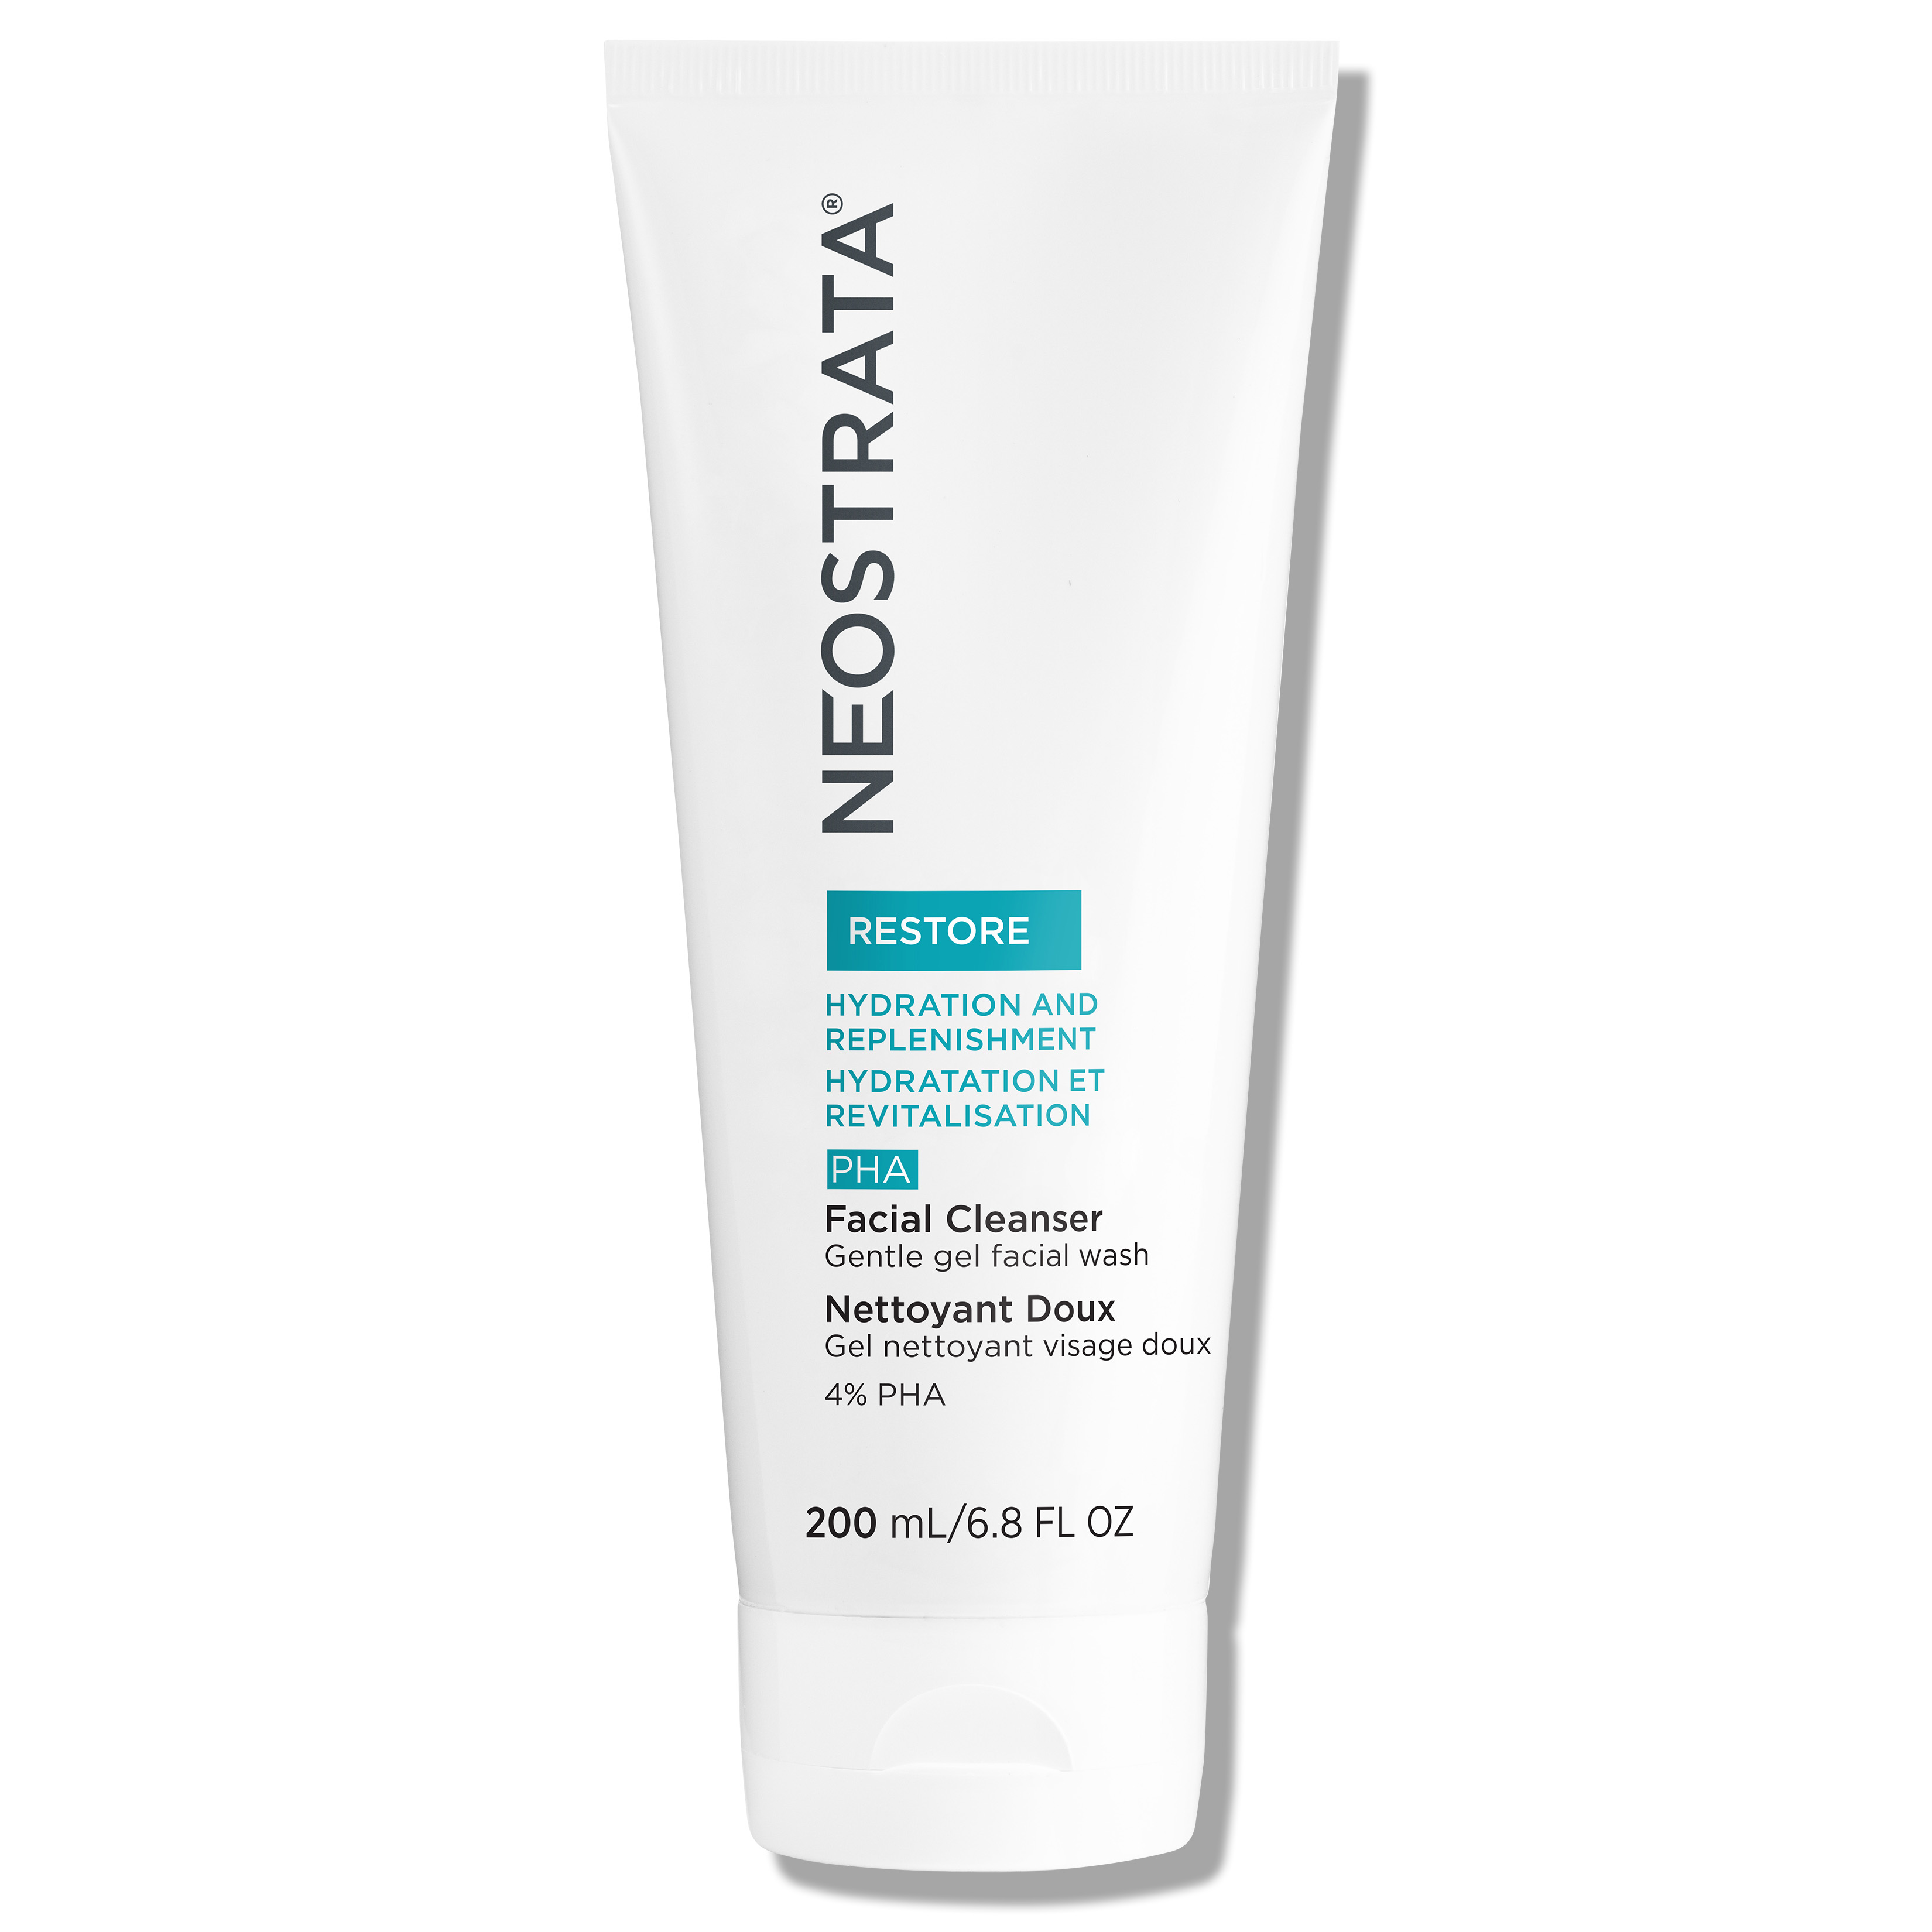 NeoStrata PHA Facial Cleanser | Gentle Gel Facial Wash | 4% Gluconolactone (PHA) | Anti-Aging